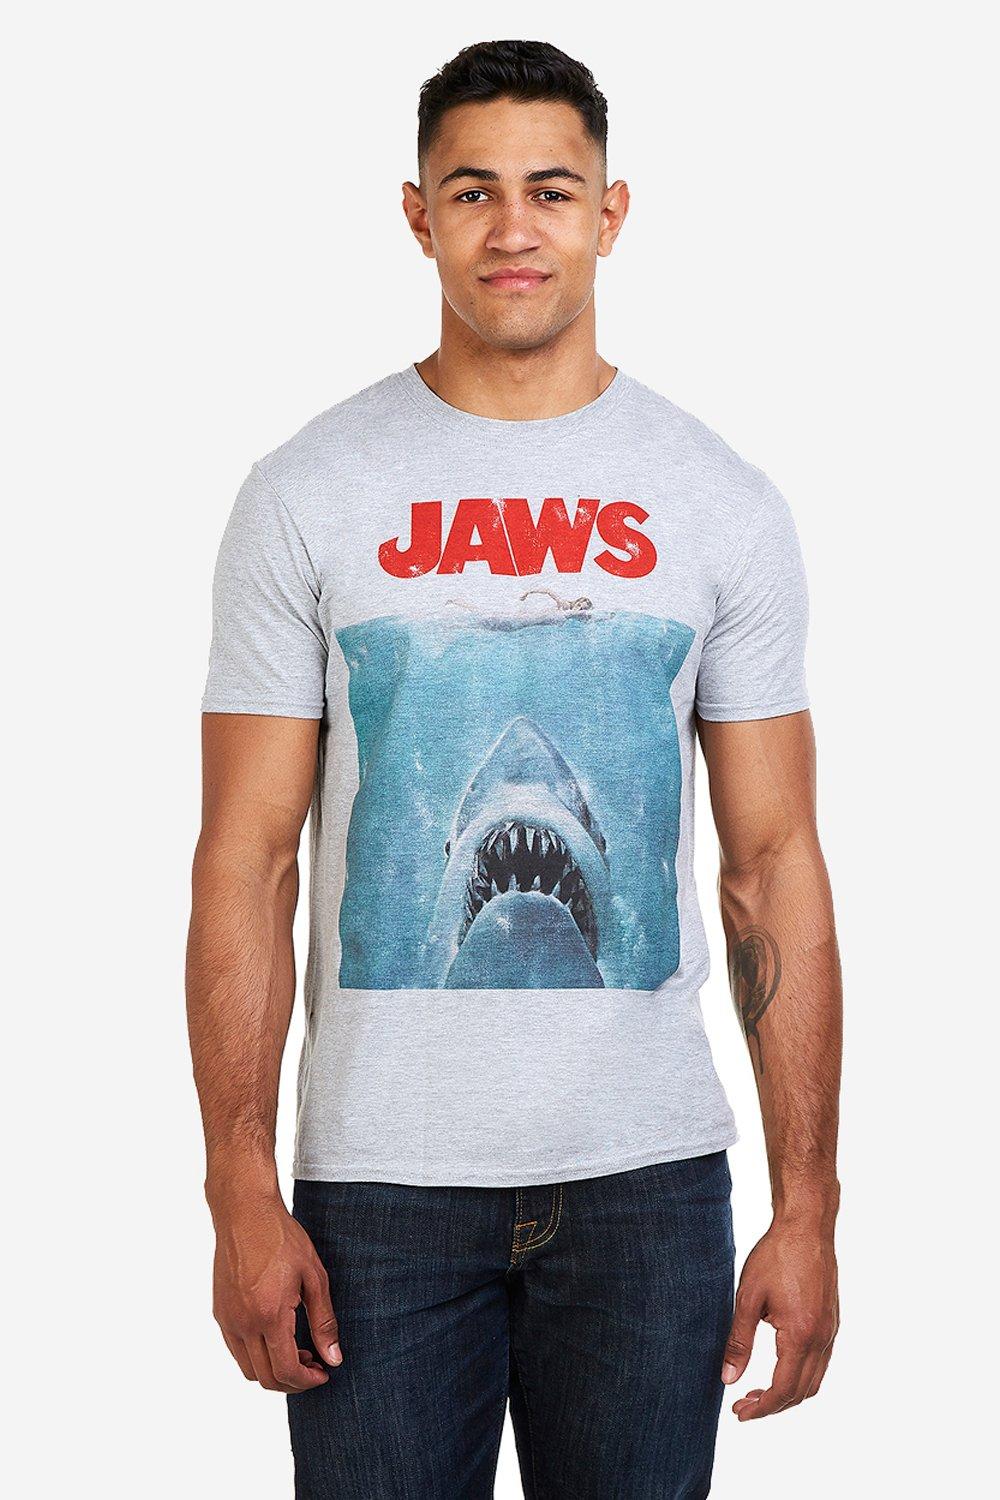 Футболка с постером фильма Jaws, серый мэтт хупер с аквалангом челюсти фигурка 20см matt hooper shark cage jaws